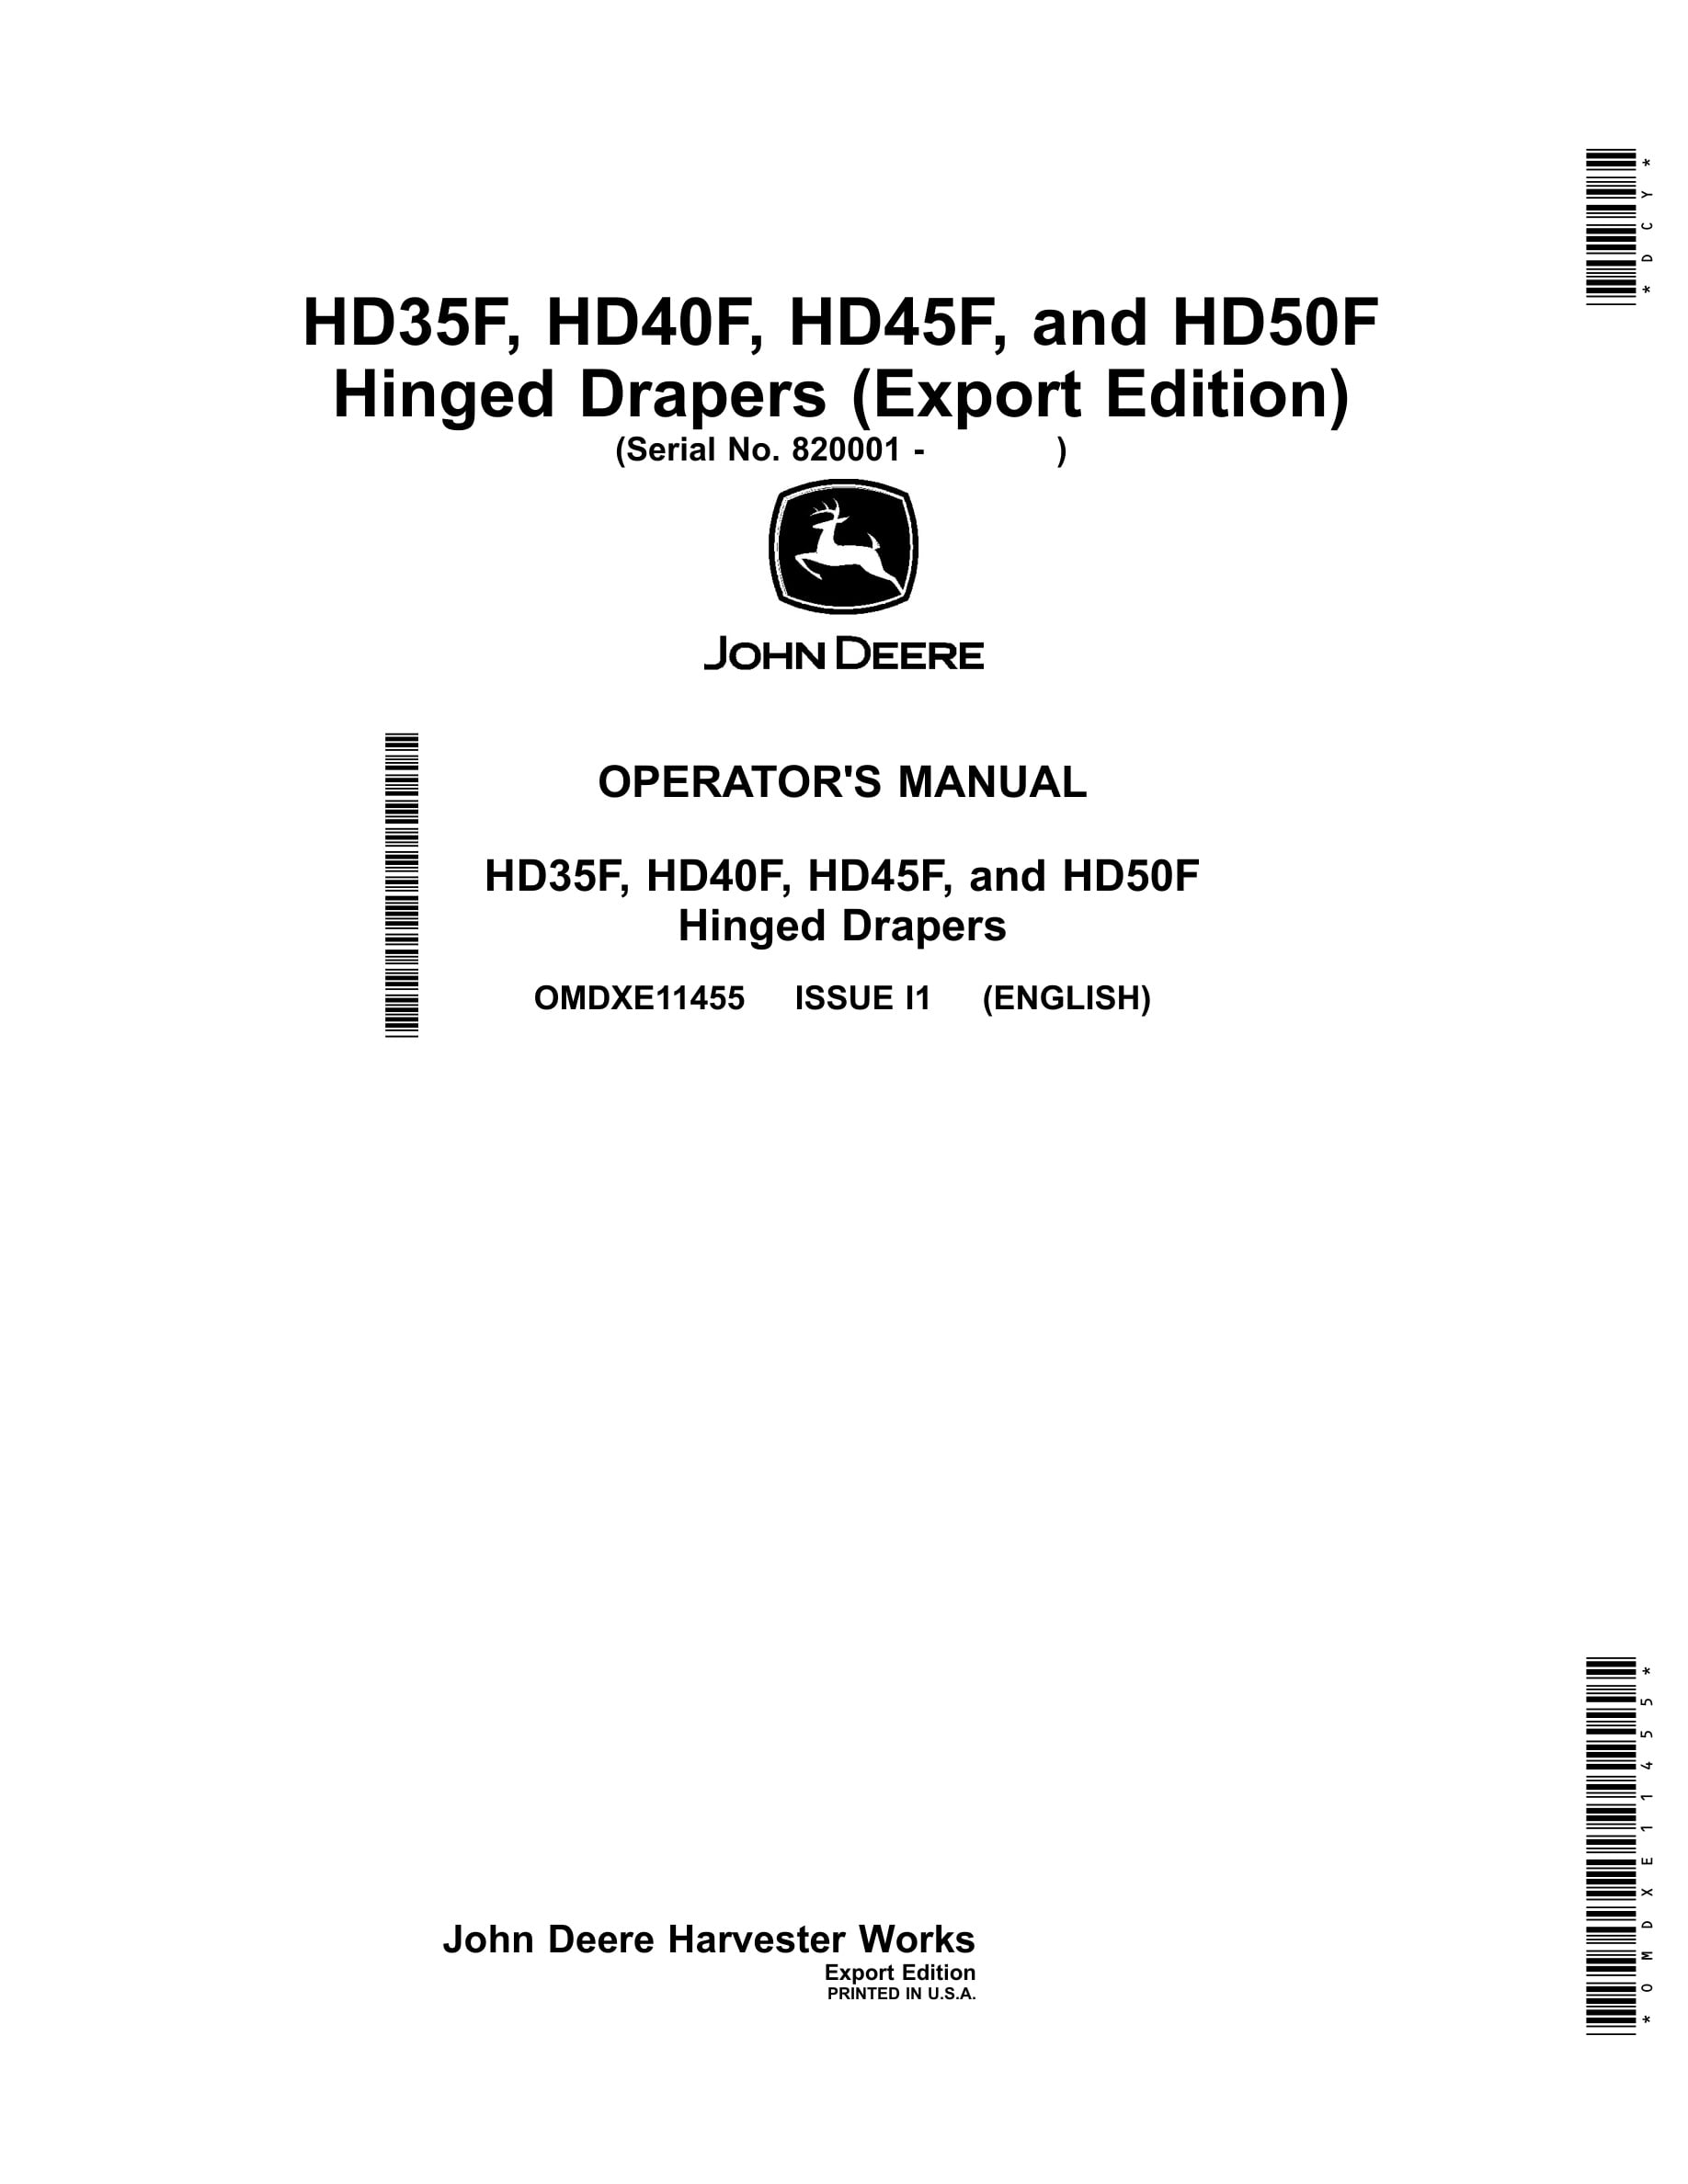 John Deere HD35F, HD40F, HD45F, and HD50F Hinged Drapers Operator Manual OMDXE11455-1